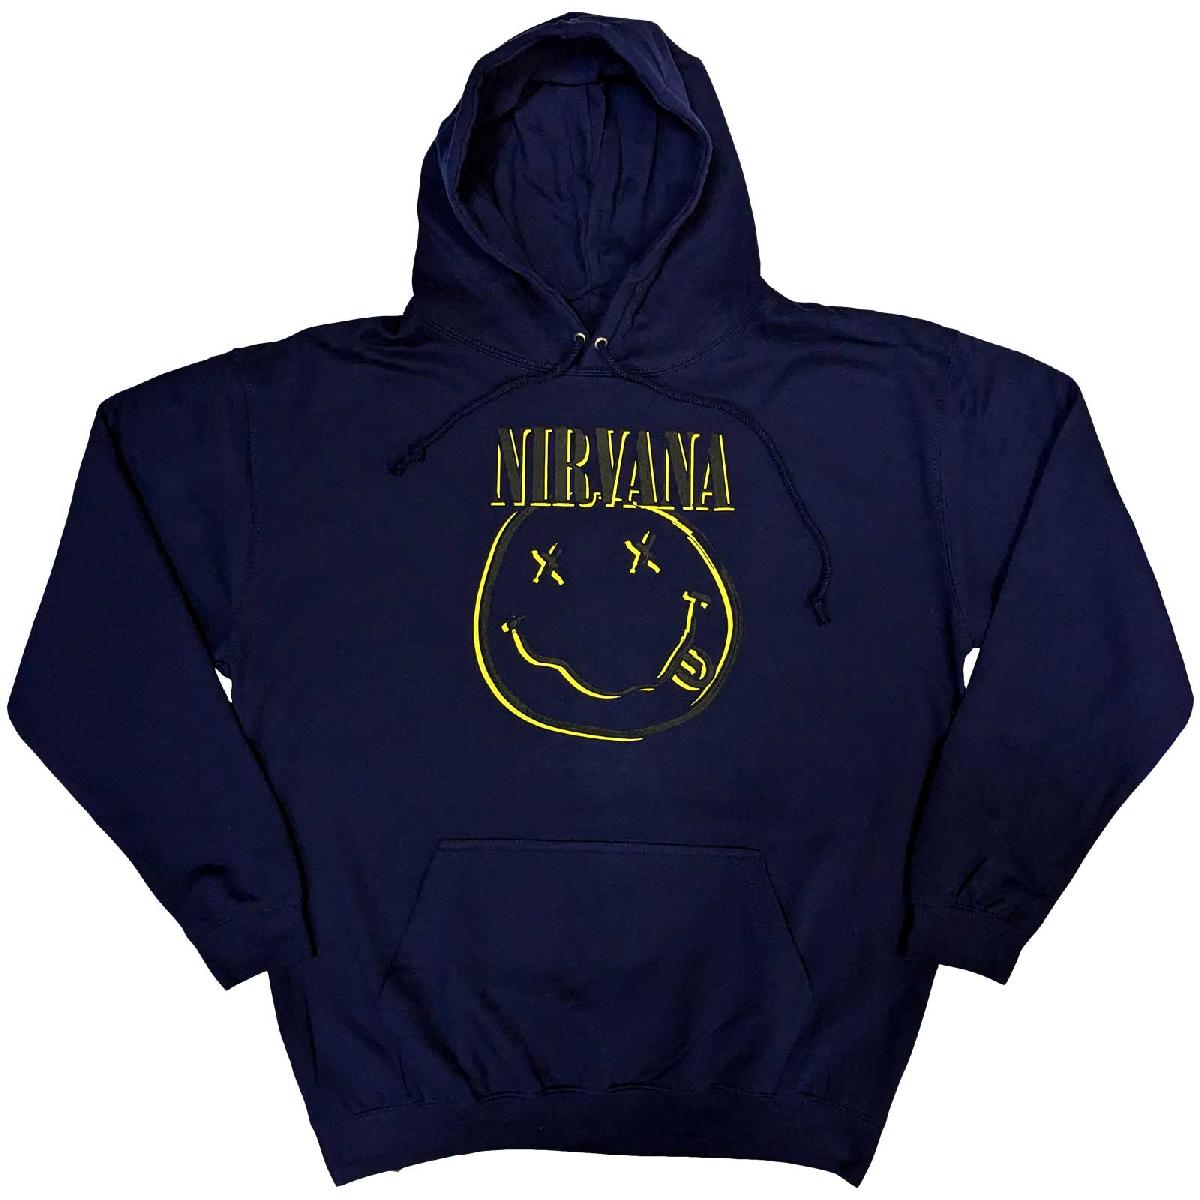 Nirvana Hoodie. Size: Medium.